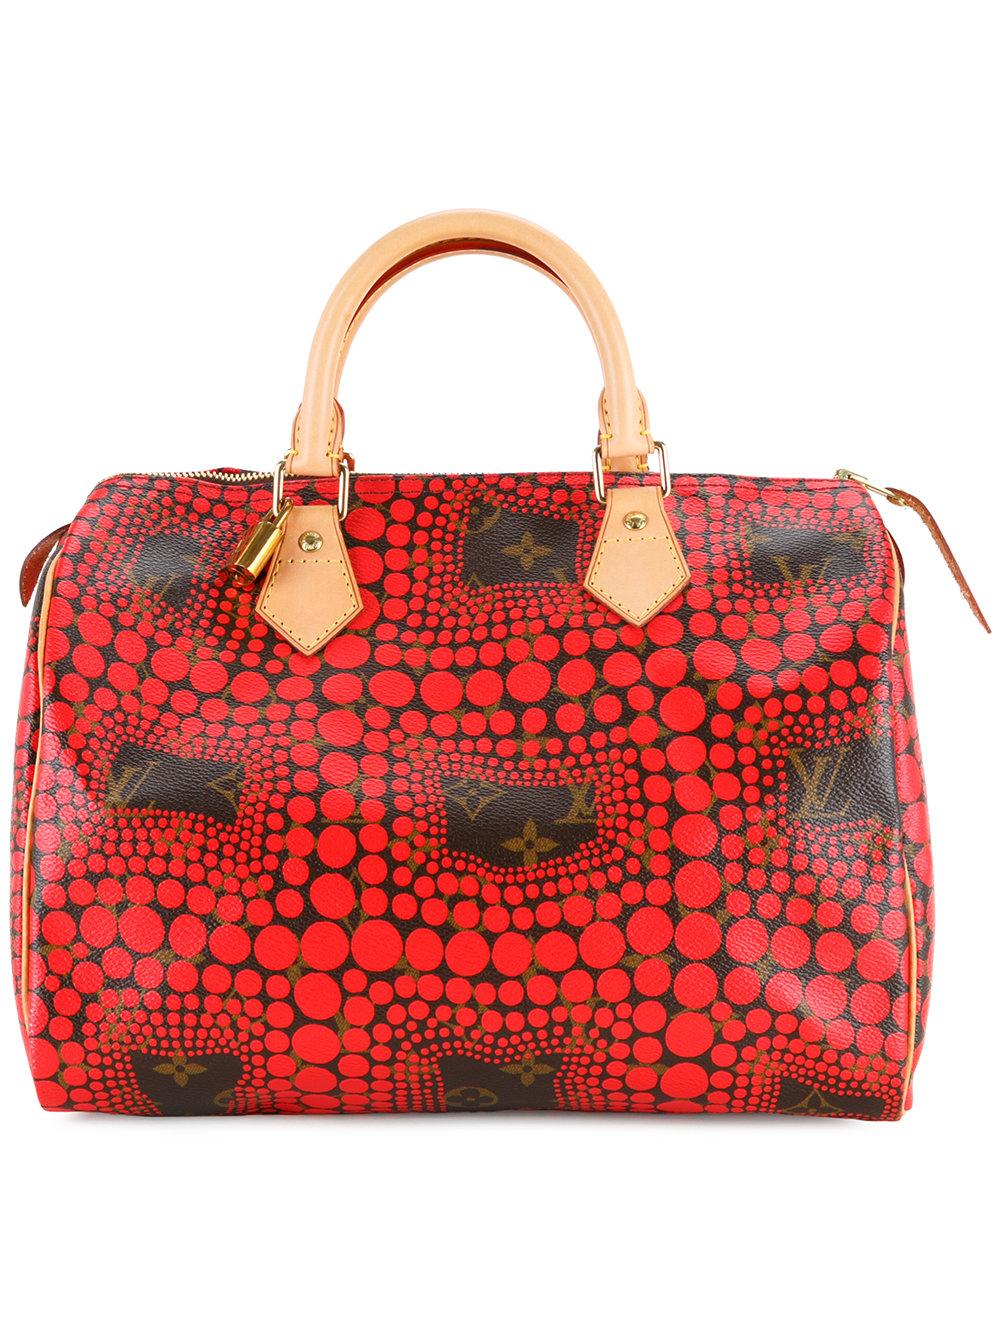 Louis Vuitton Yayoi Kusama X Louis Vuitton Speedy Bag in Red - Lyst